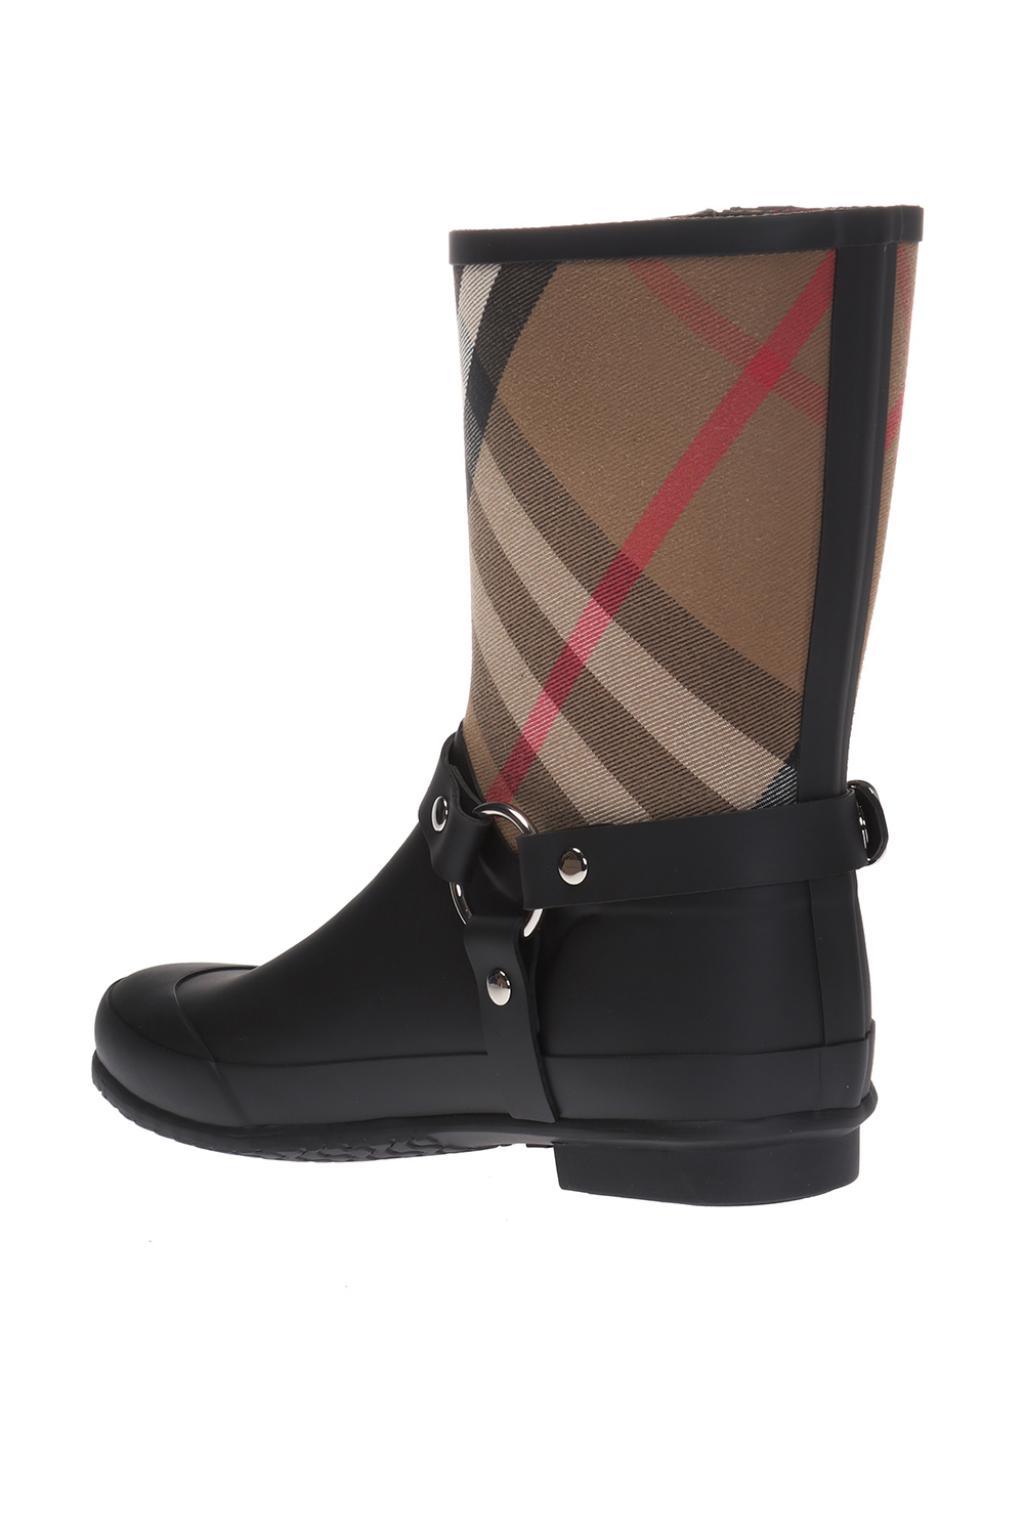 burberry zane rain boots